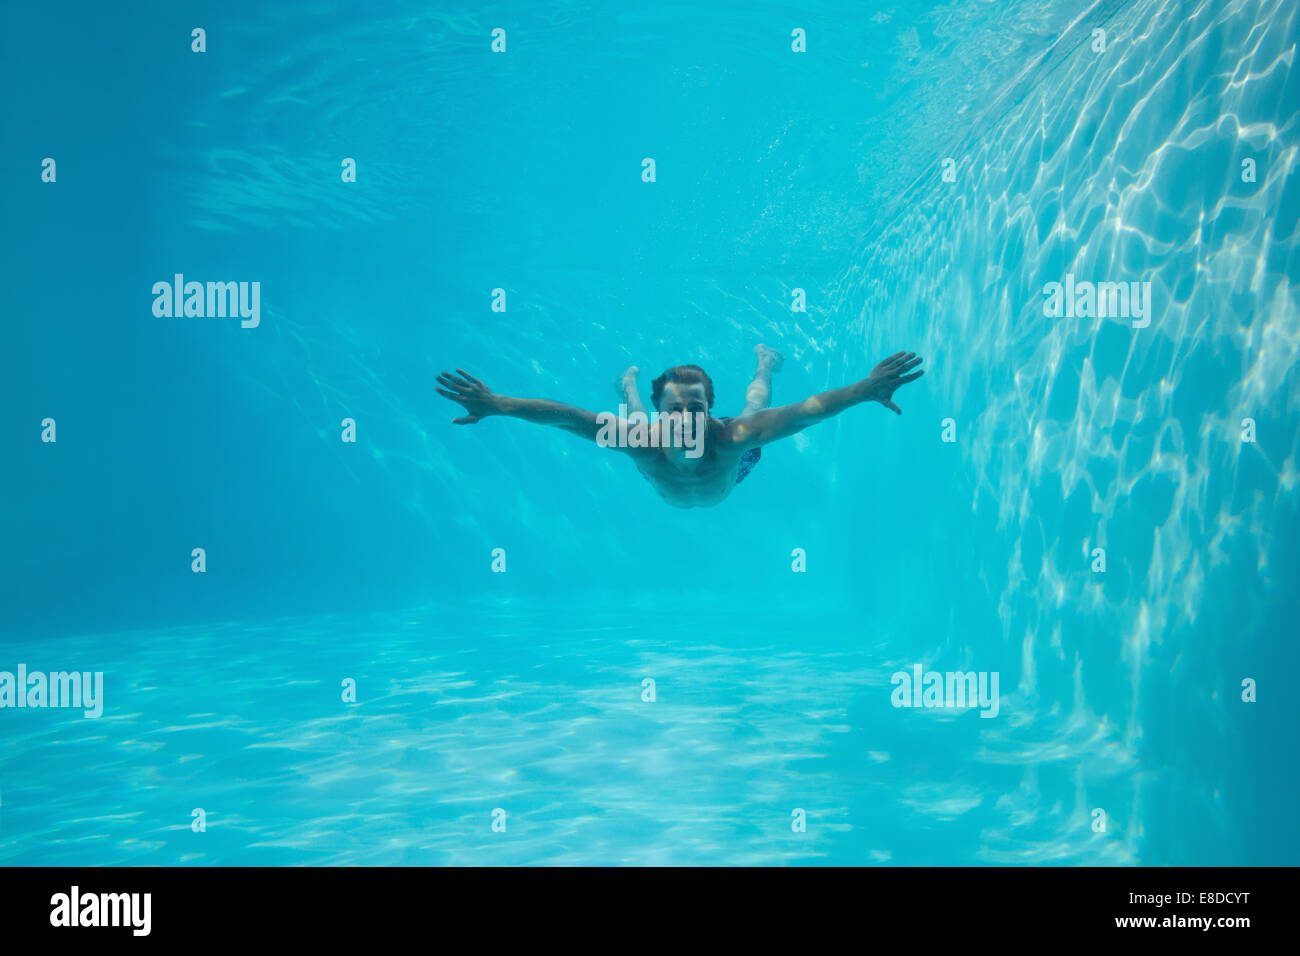 Giovane uomo nuoto sott'acqua Foto Stock